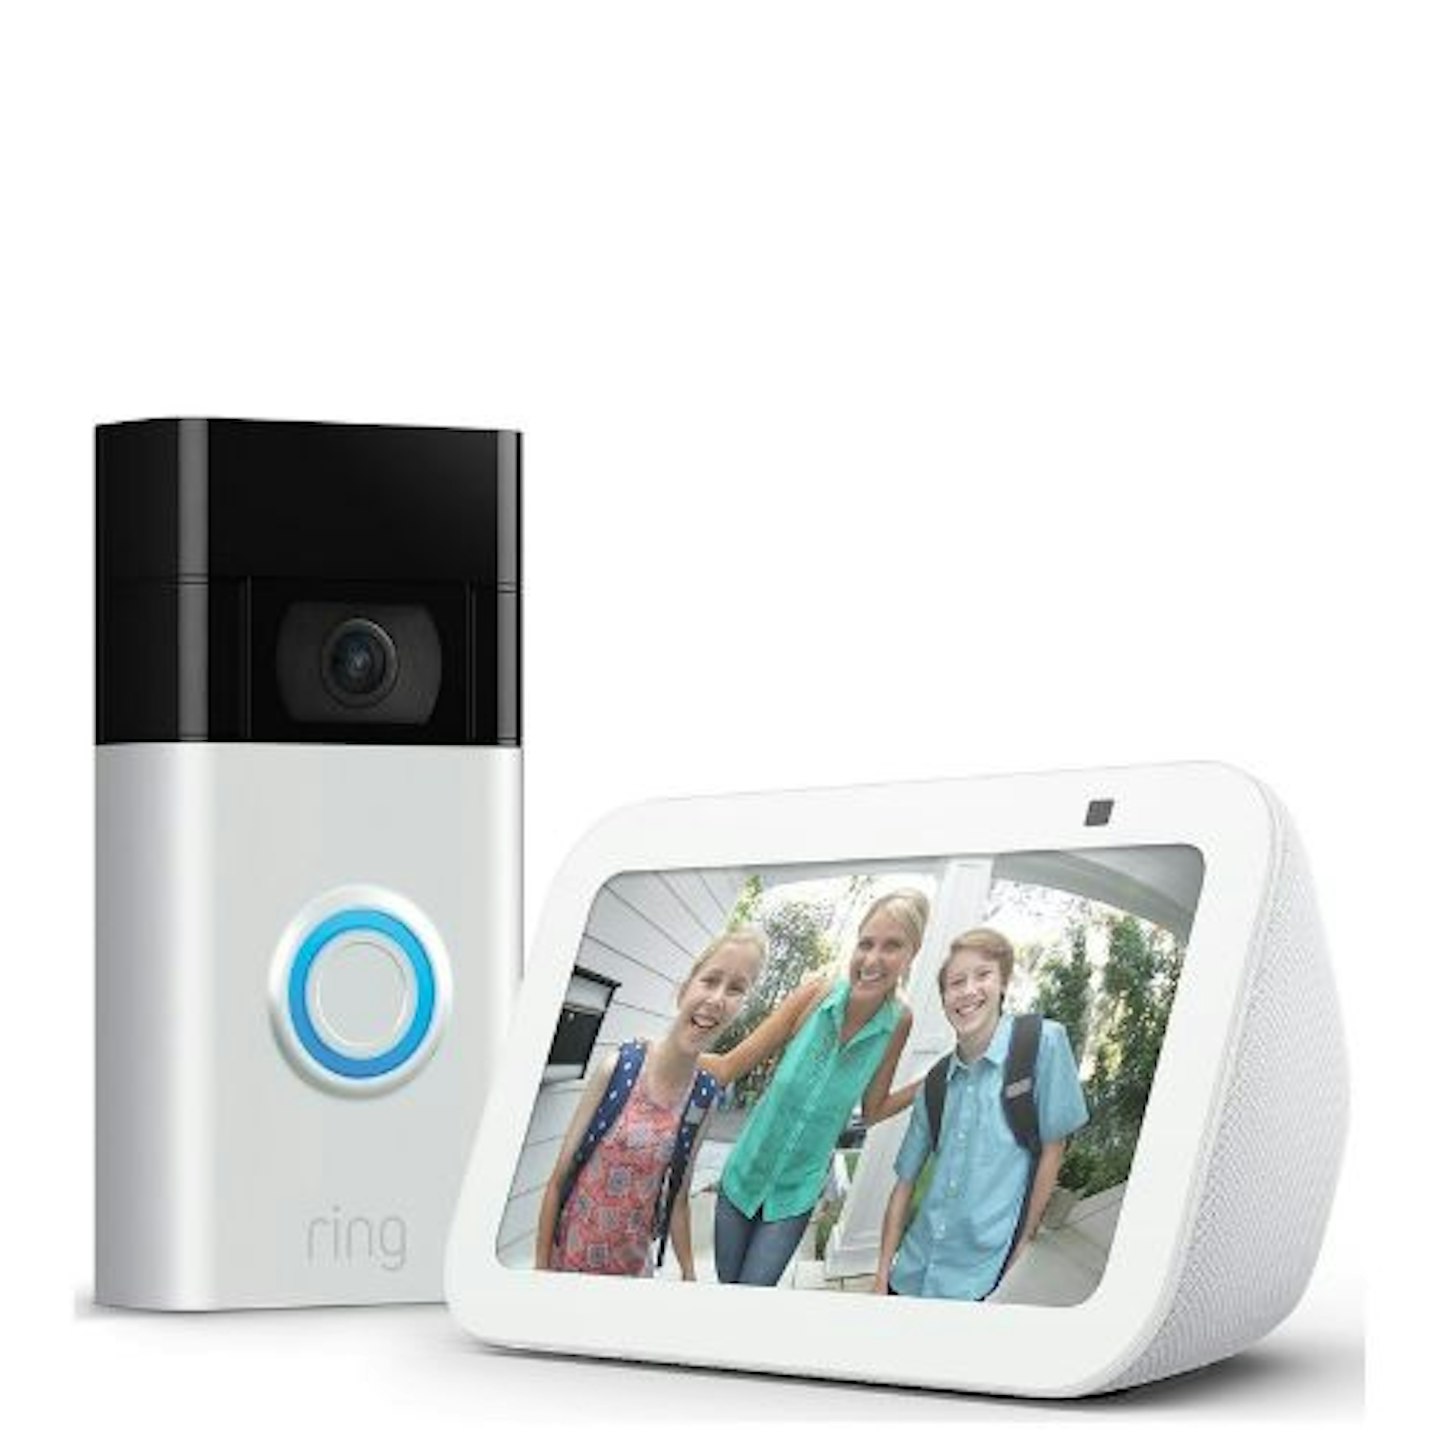 Ring Video Doorbell with Amazon Echo Show 5